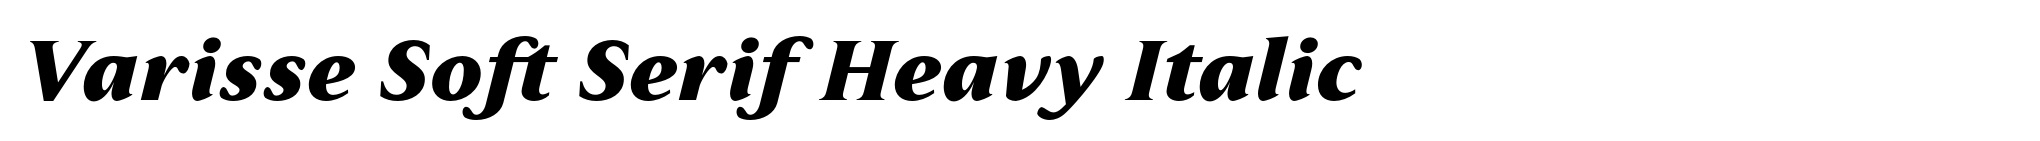 Varisse Soft Serif Heavy Italic image